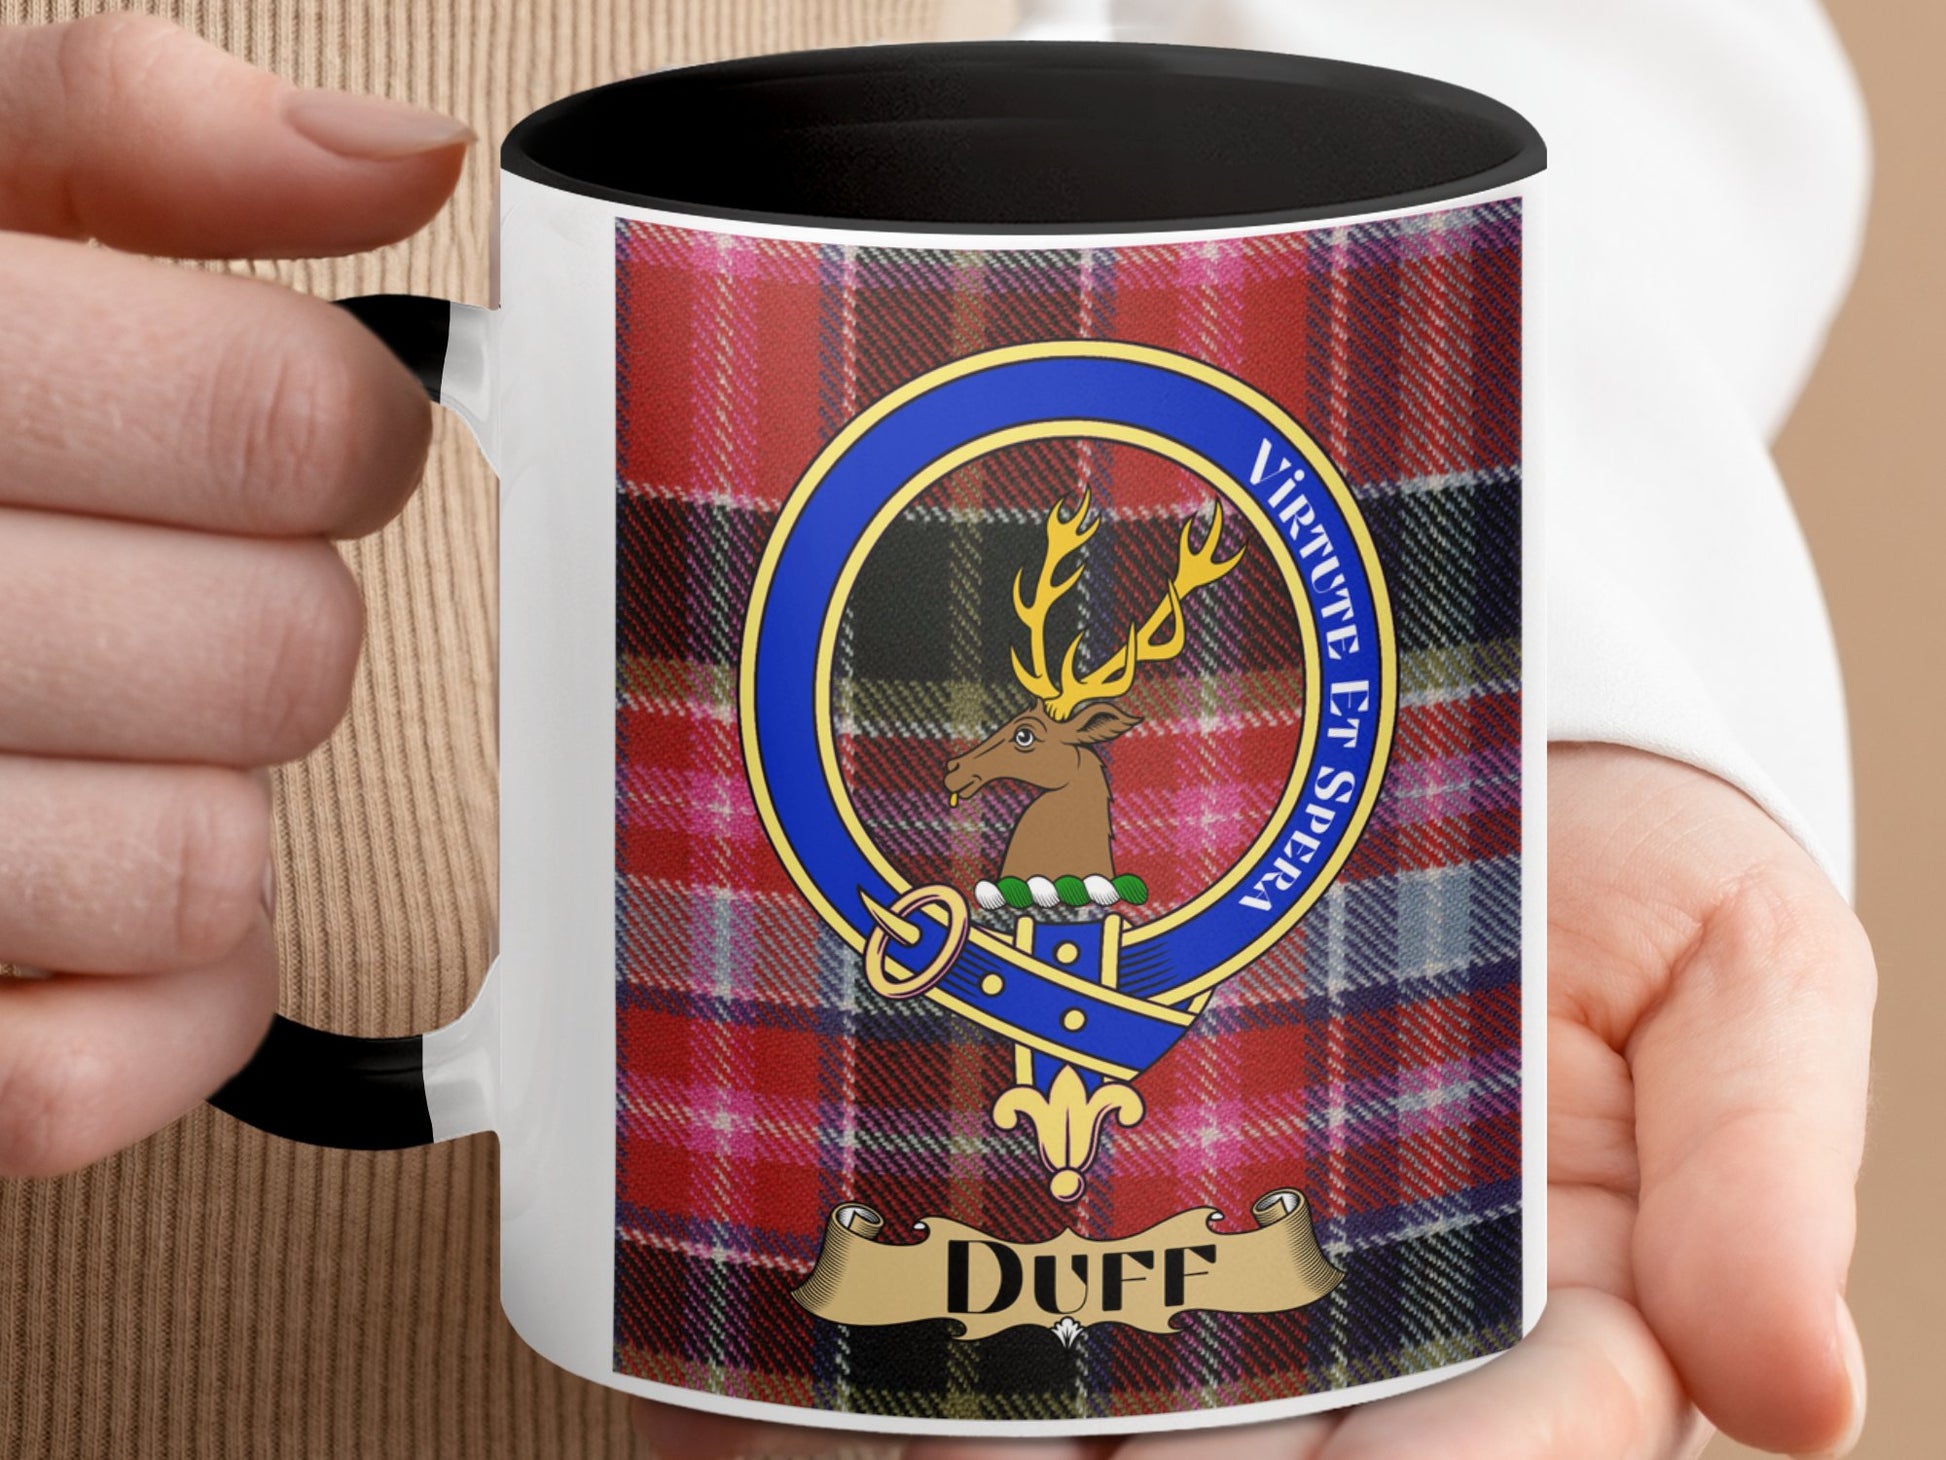 Clan Duff Scottish Tartan Crest Design Mug - Living Stone Gifts